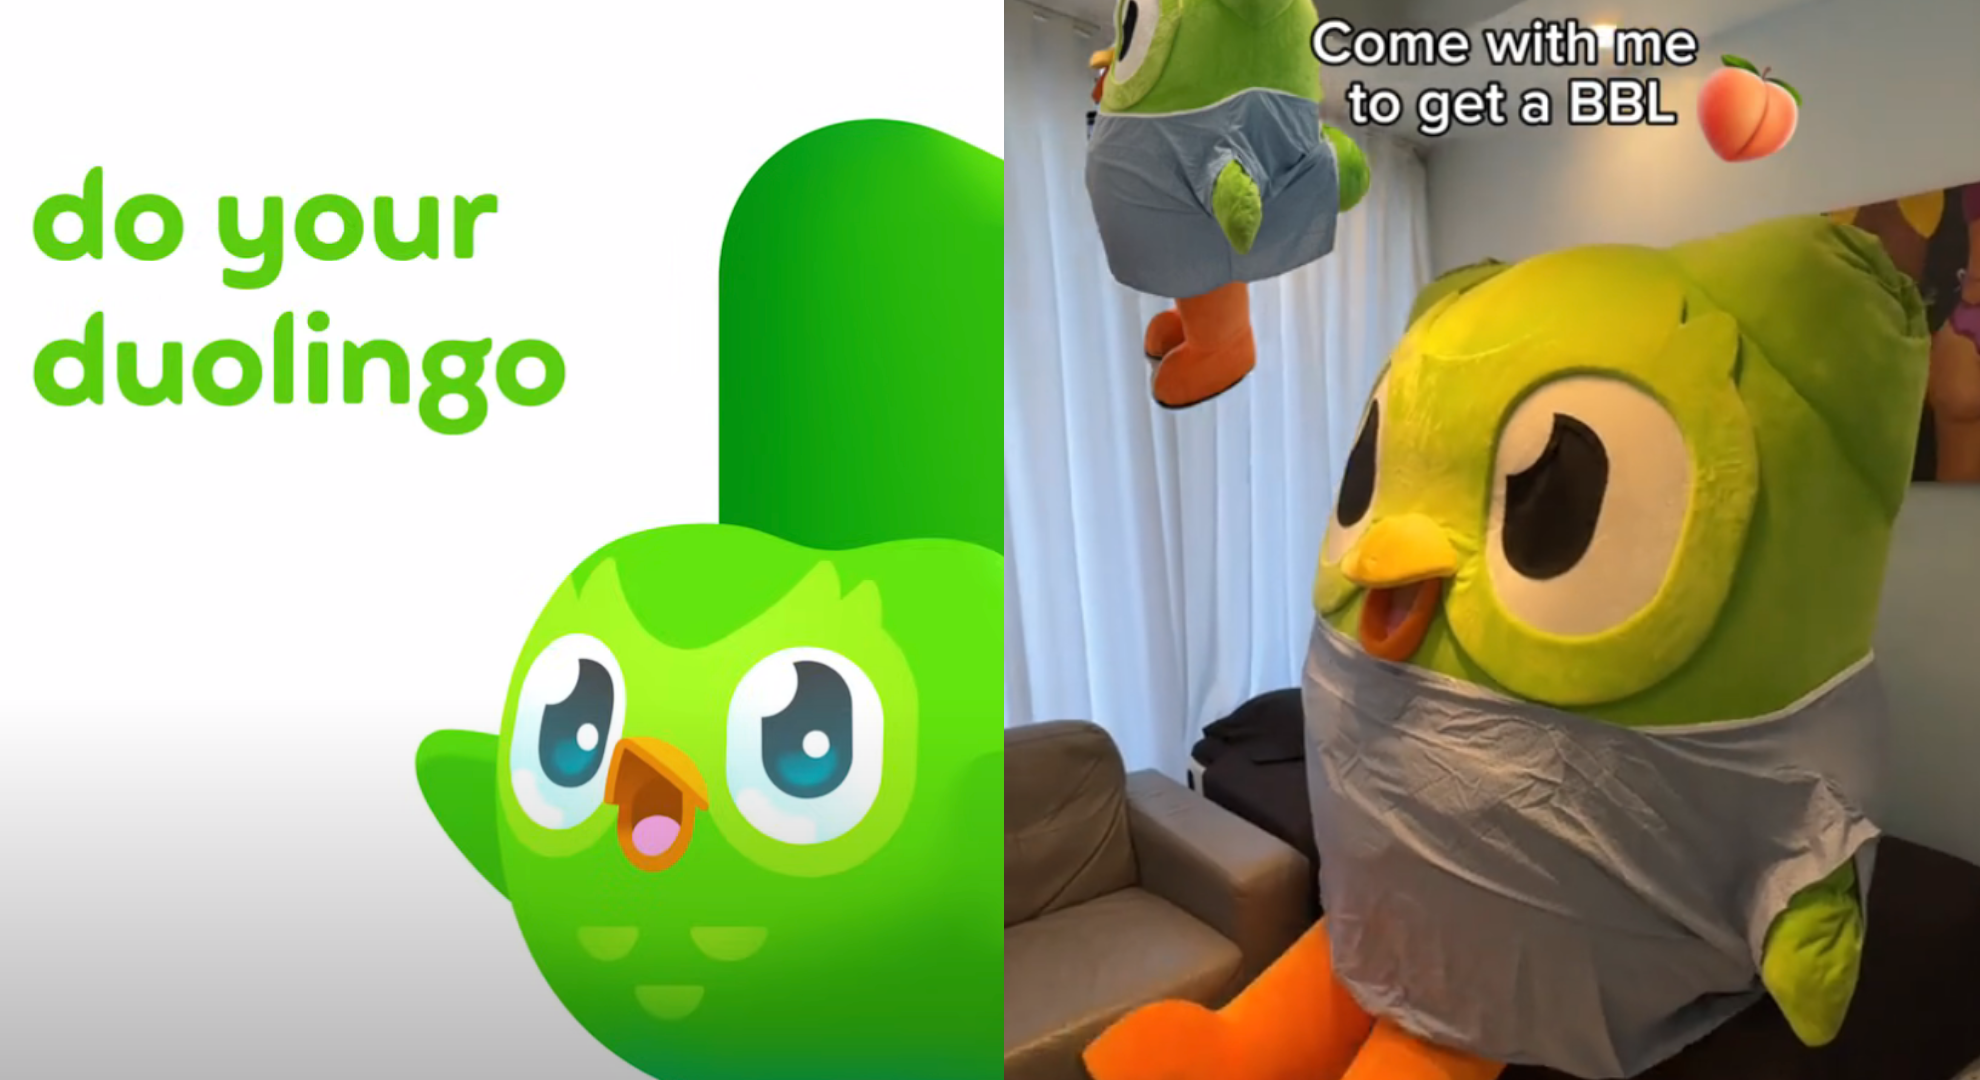 Duolingo mascot flaunts 'BBL surgery' at the Super Bowl in bizarre 5-second  commercial